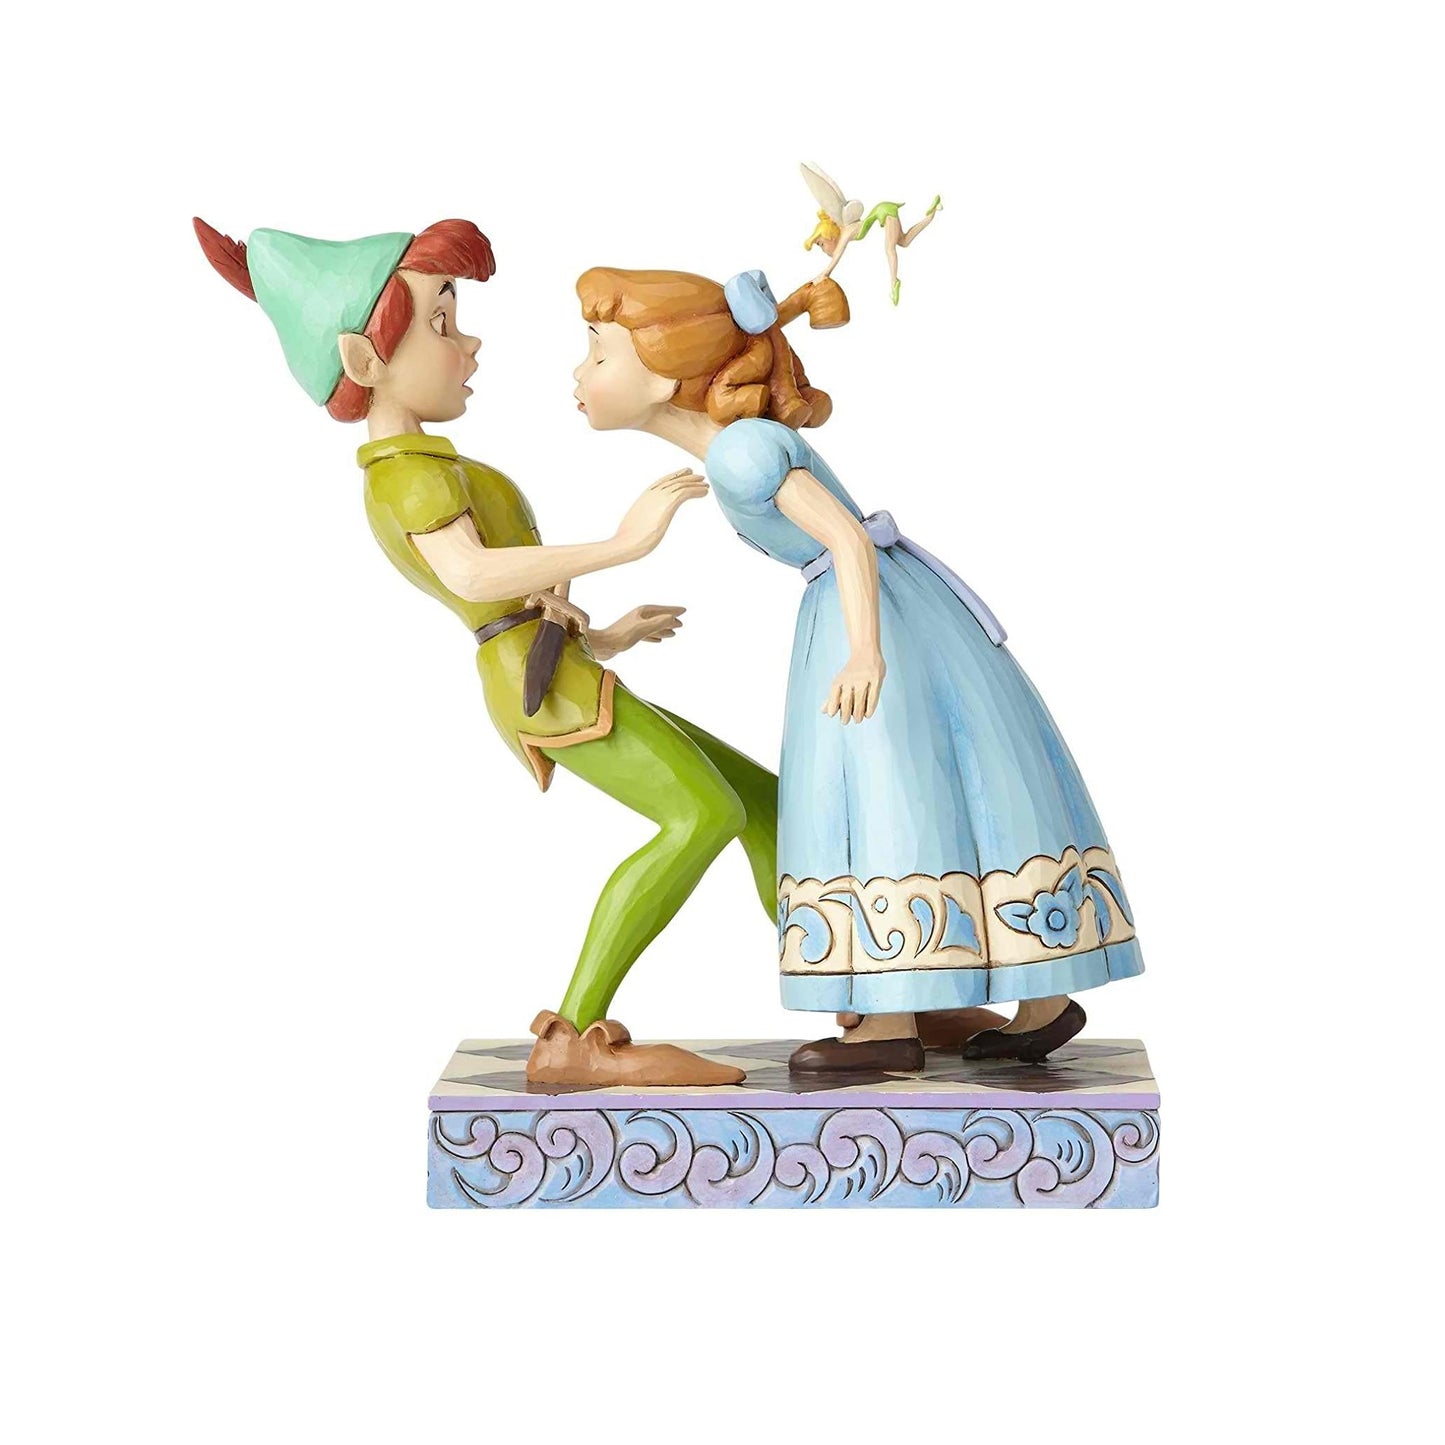 Enesco 65th Anniversary Peter Pan, Wendy & Tinker Bell